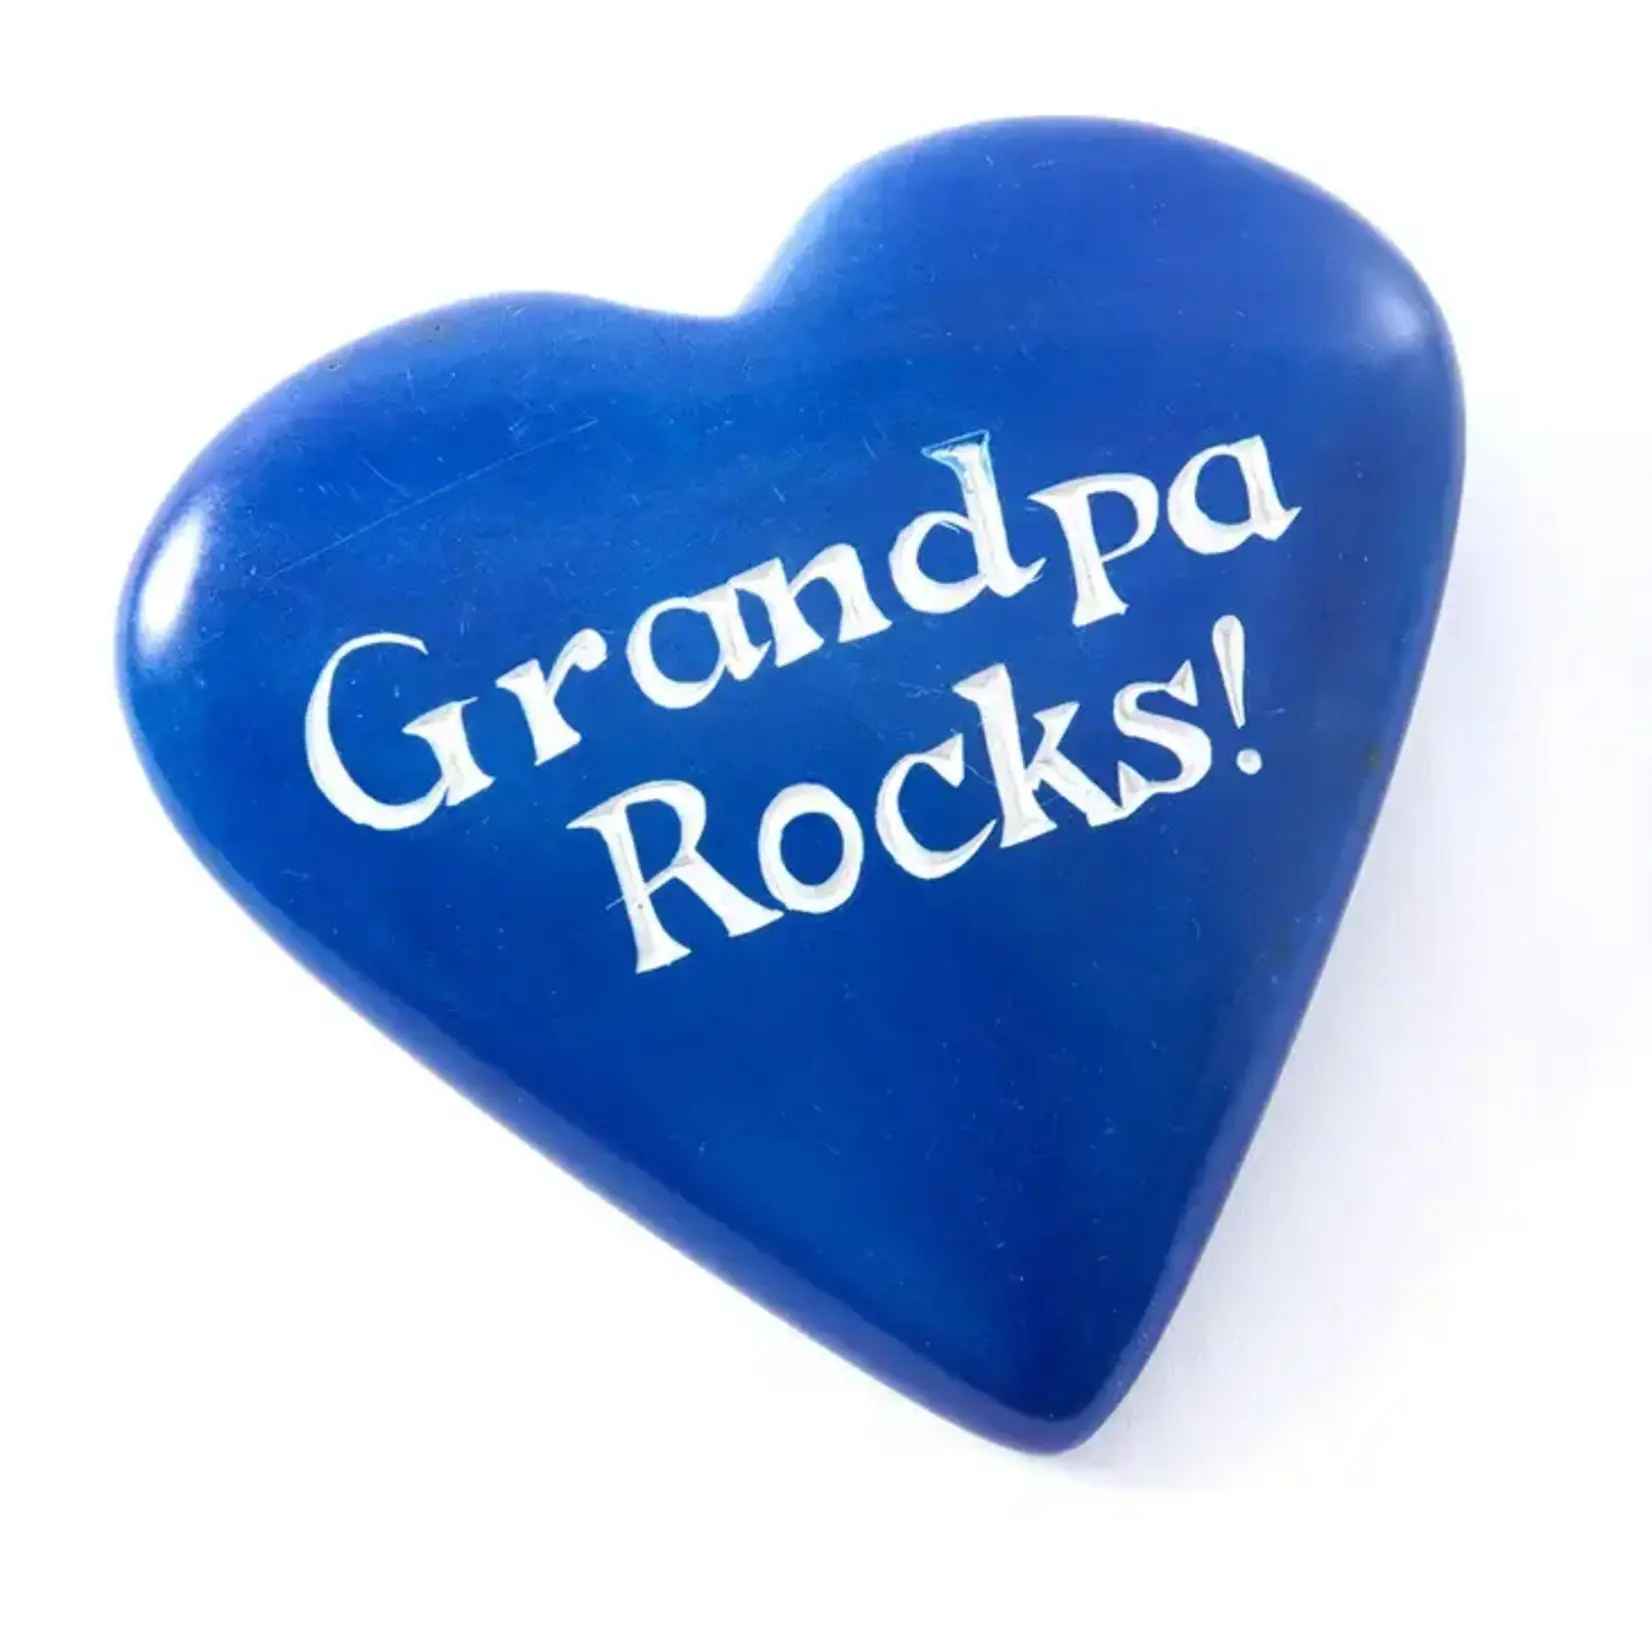 Grandpa Rocks!